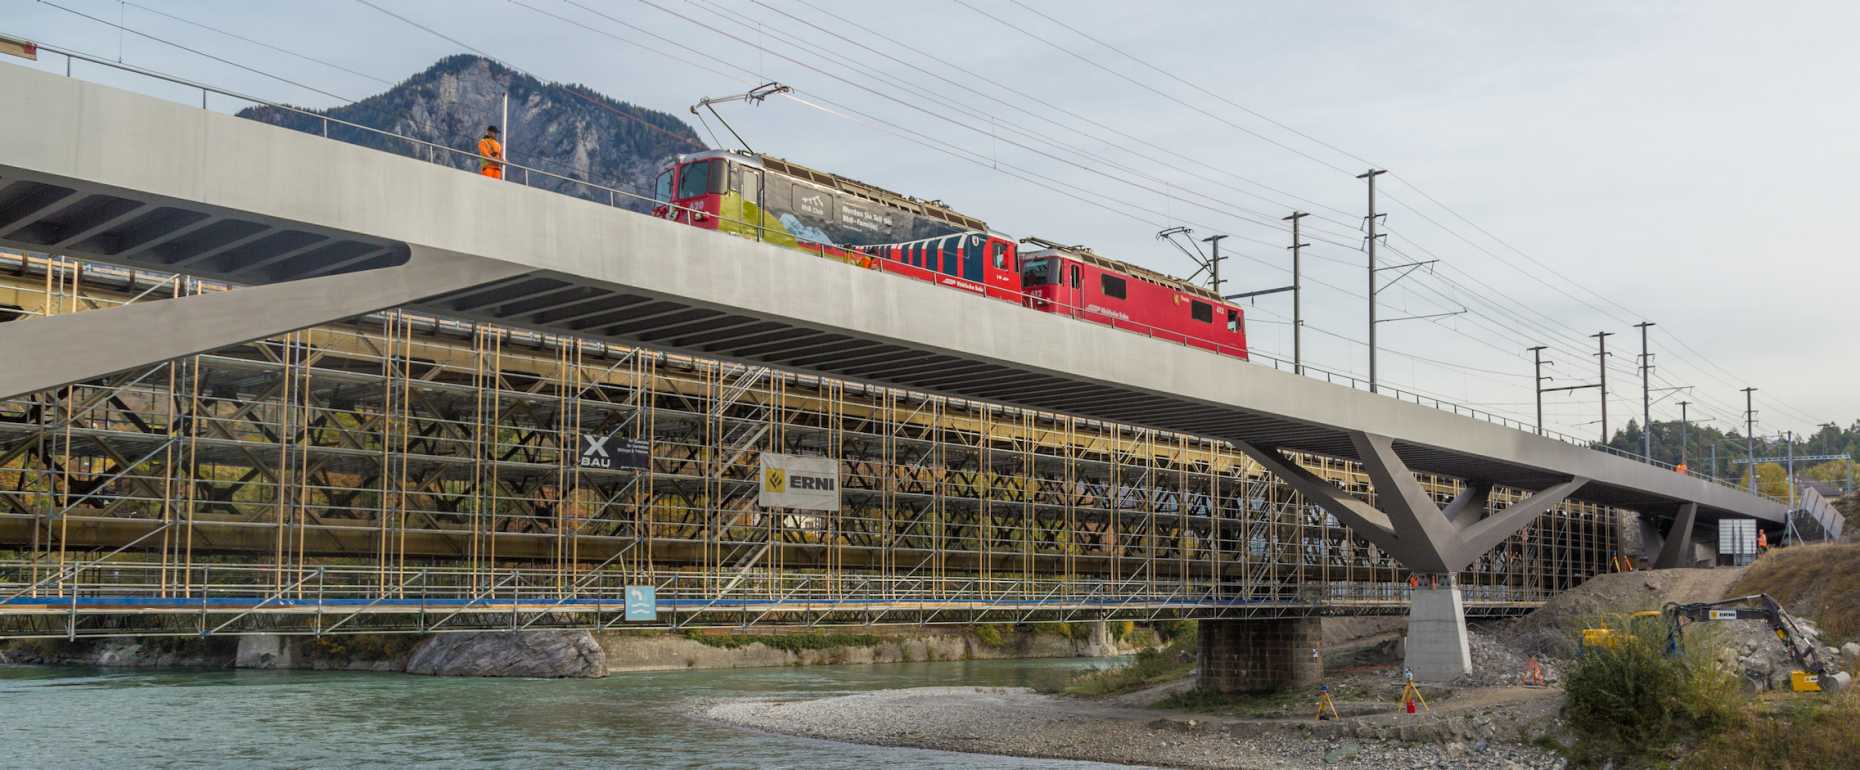 Image of a train on the Hinterrhein railway bridge